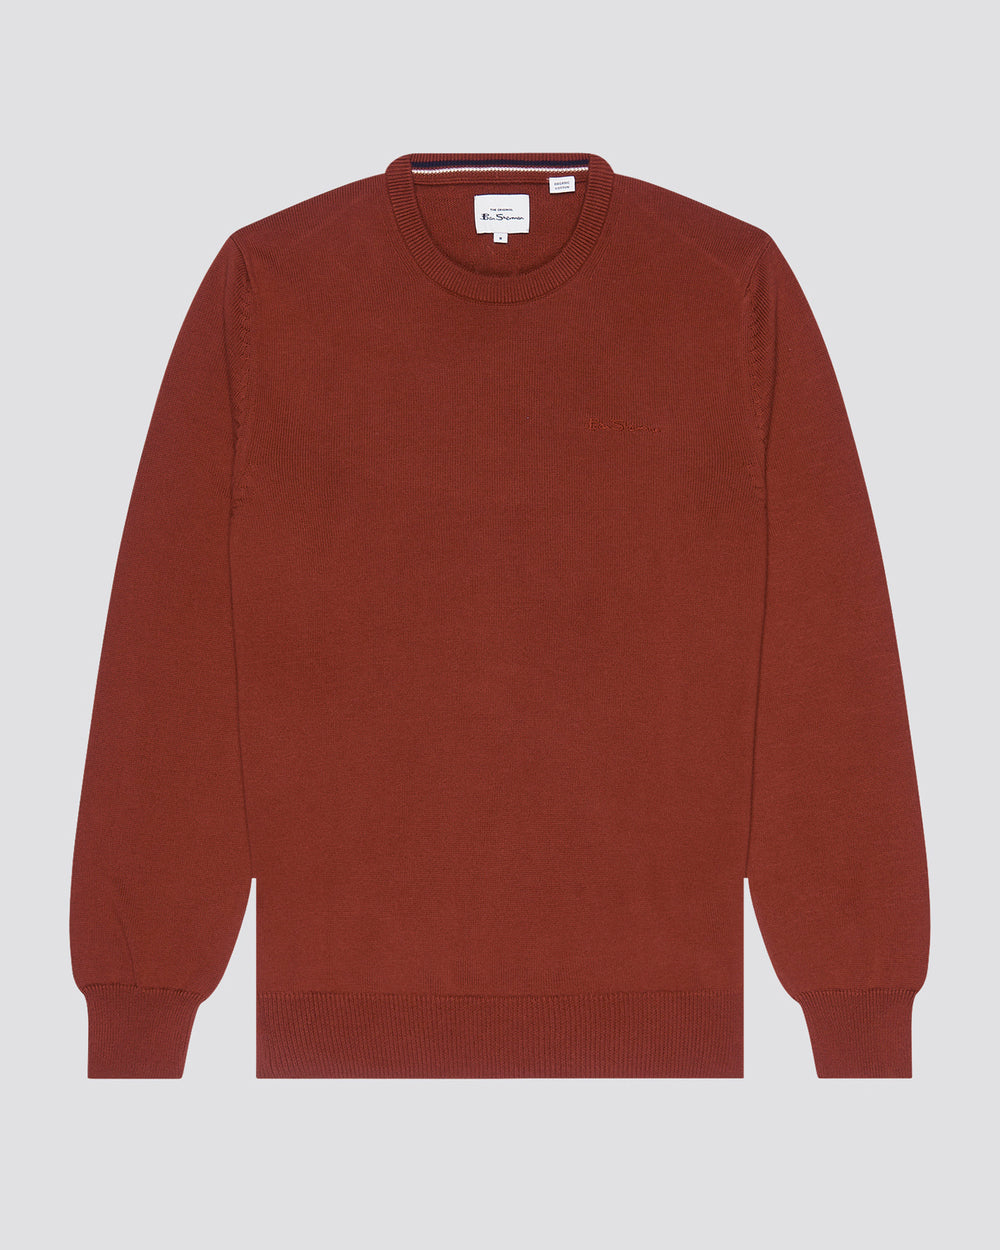 Crewneck Signature - Burnt Ben Sweater Knit Orange Sherman -